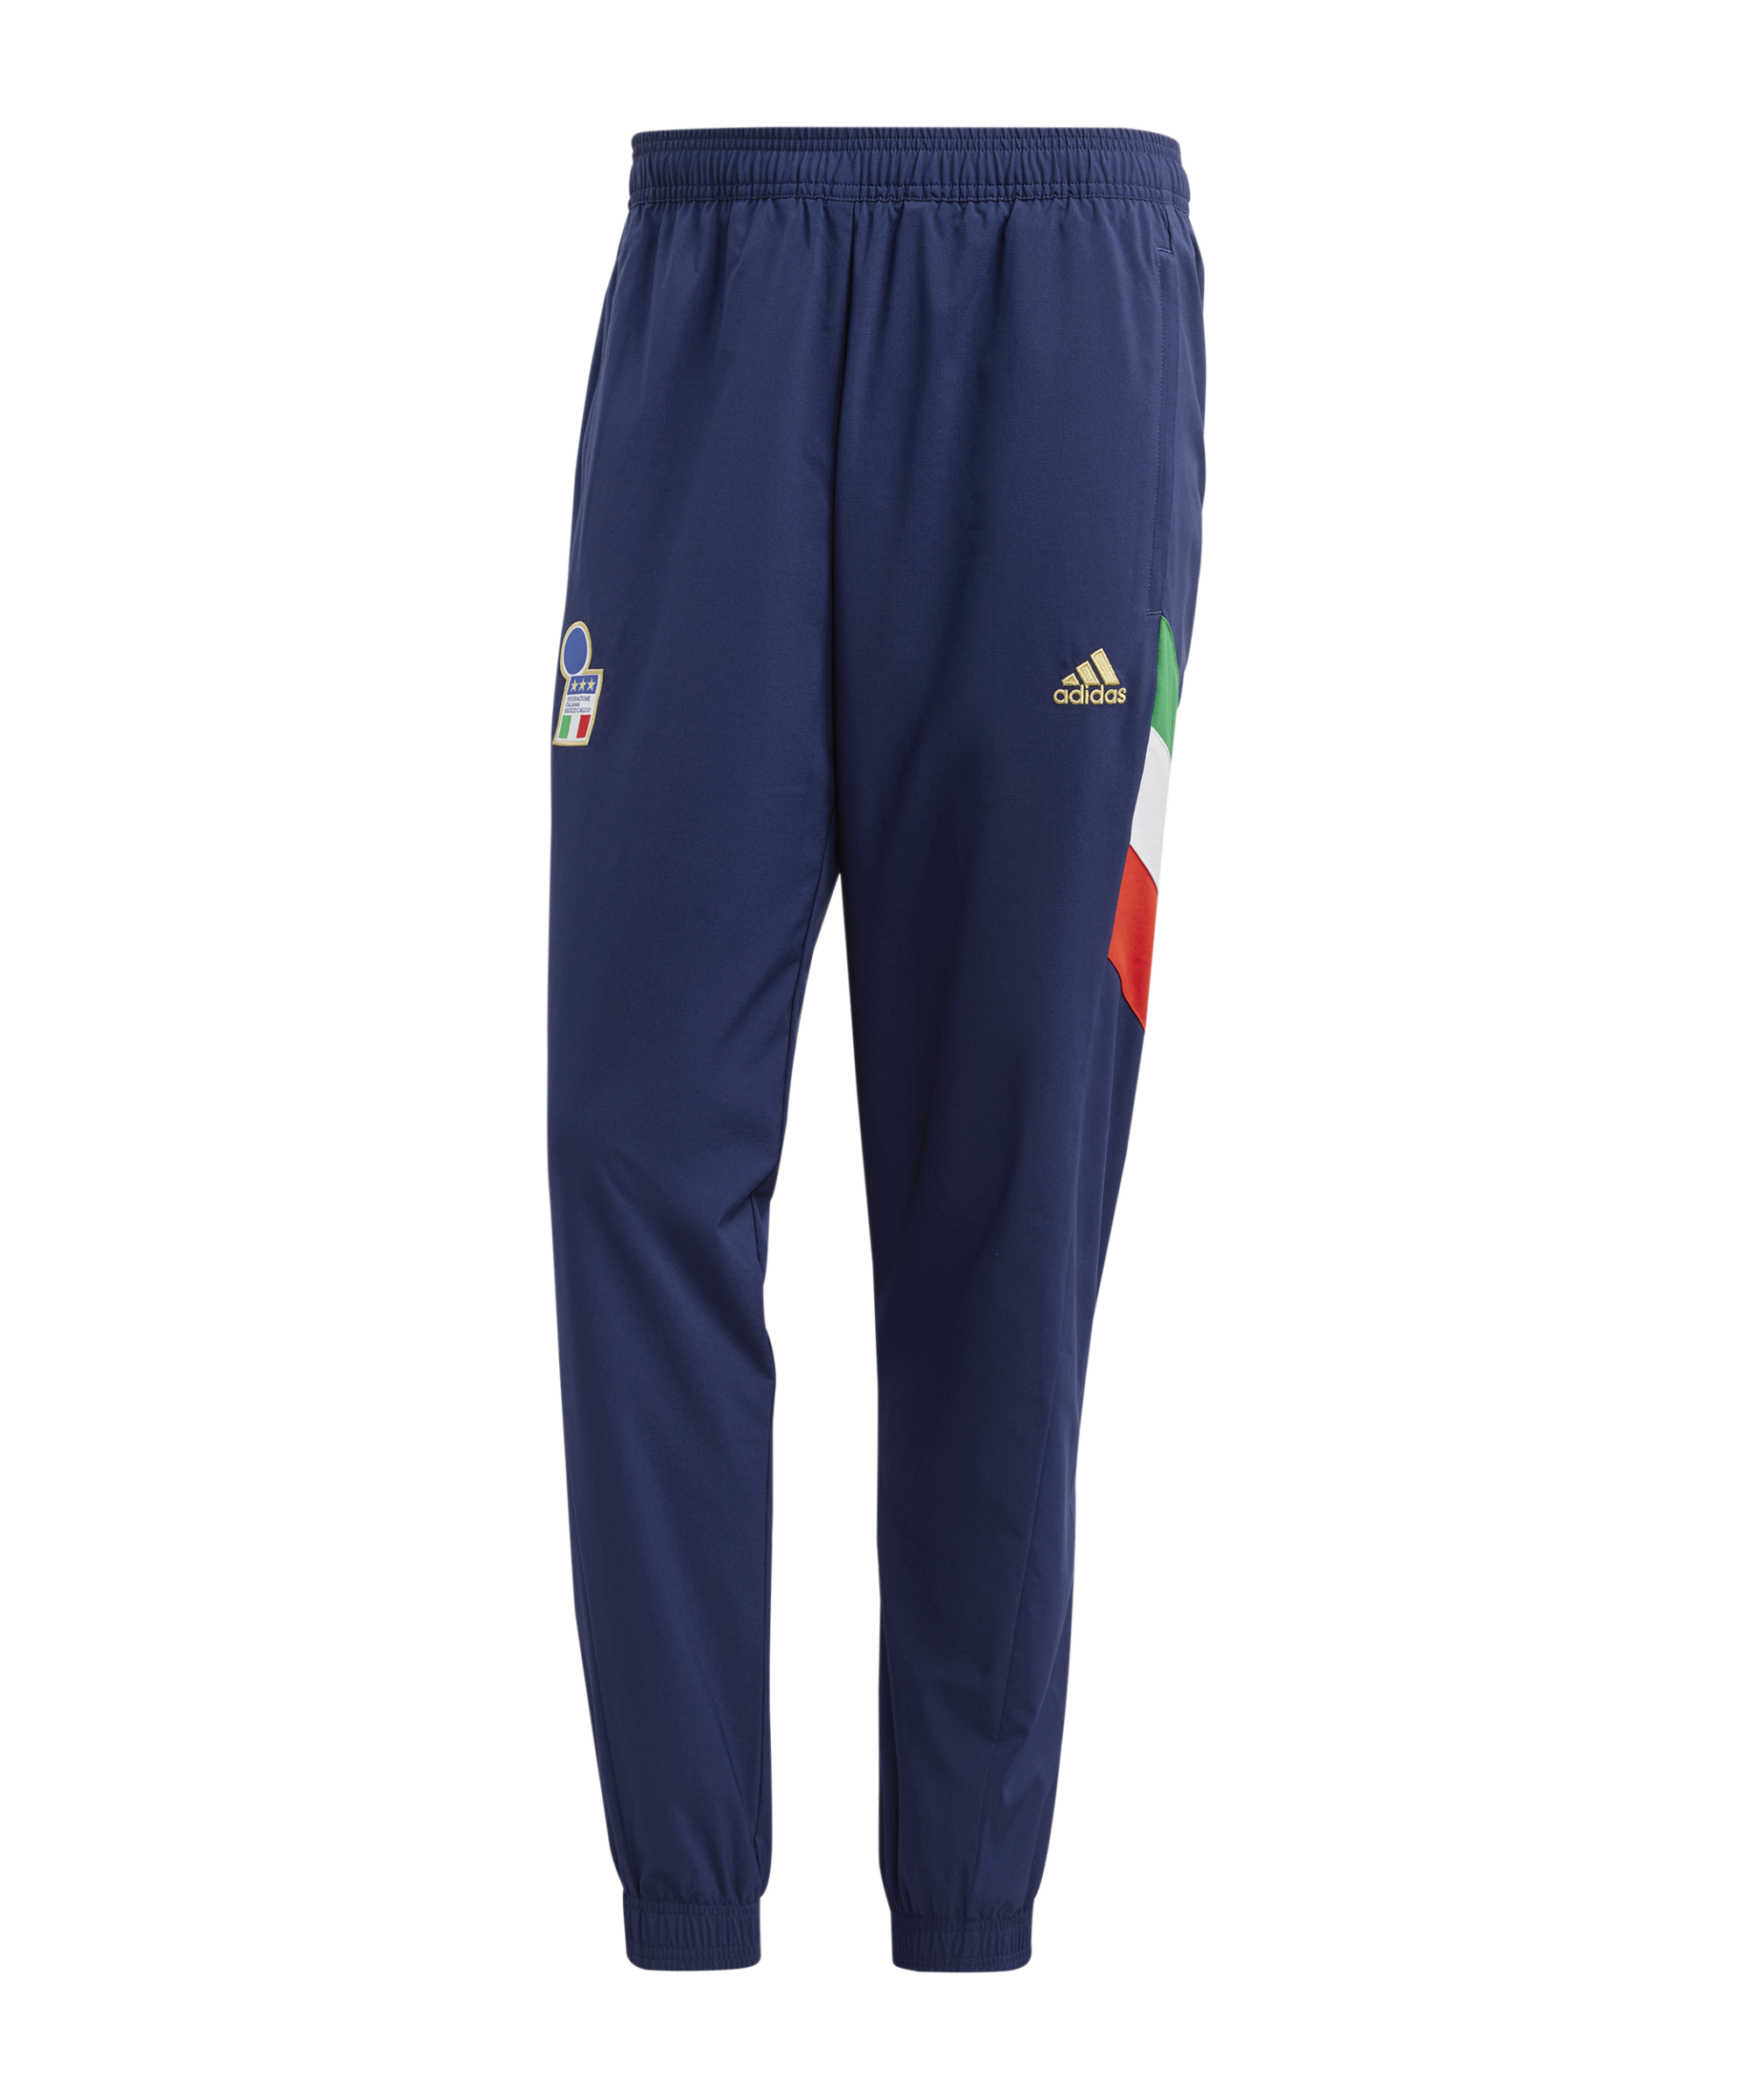 Adidas Italy Icon Goalkeeper Jersey